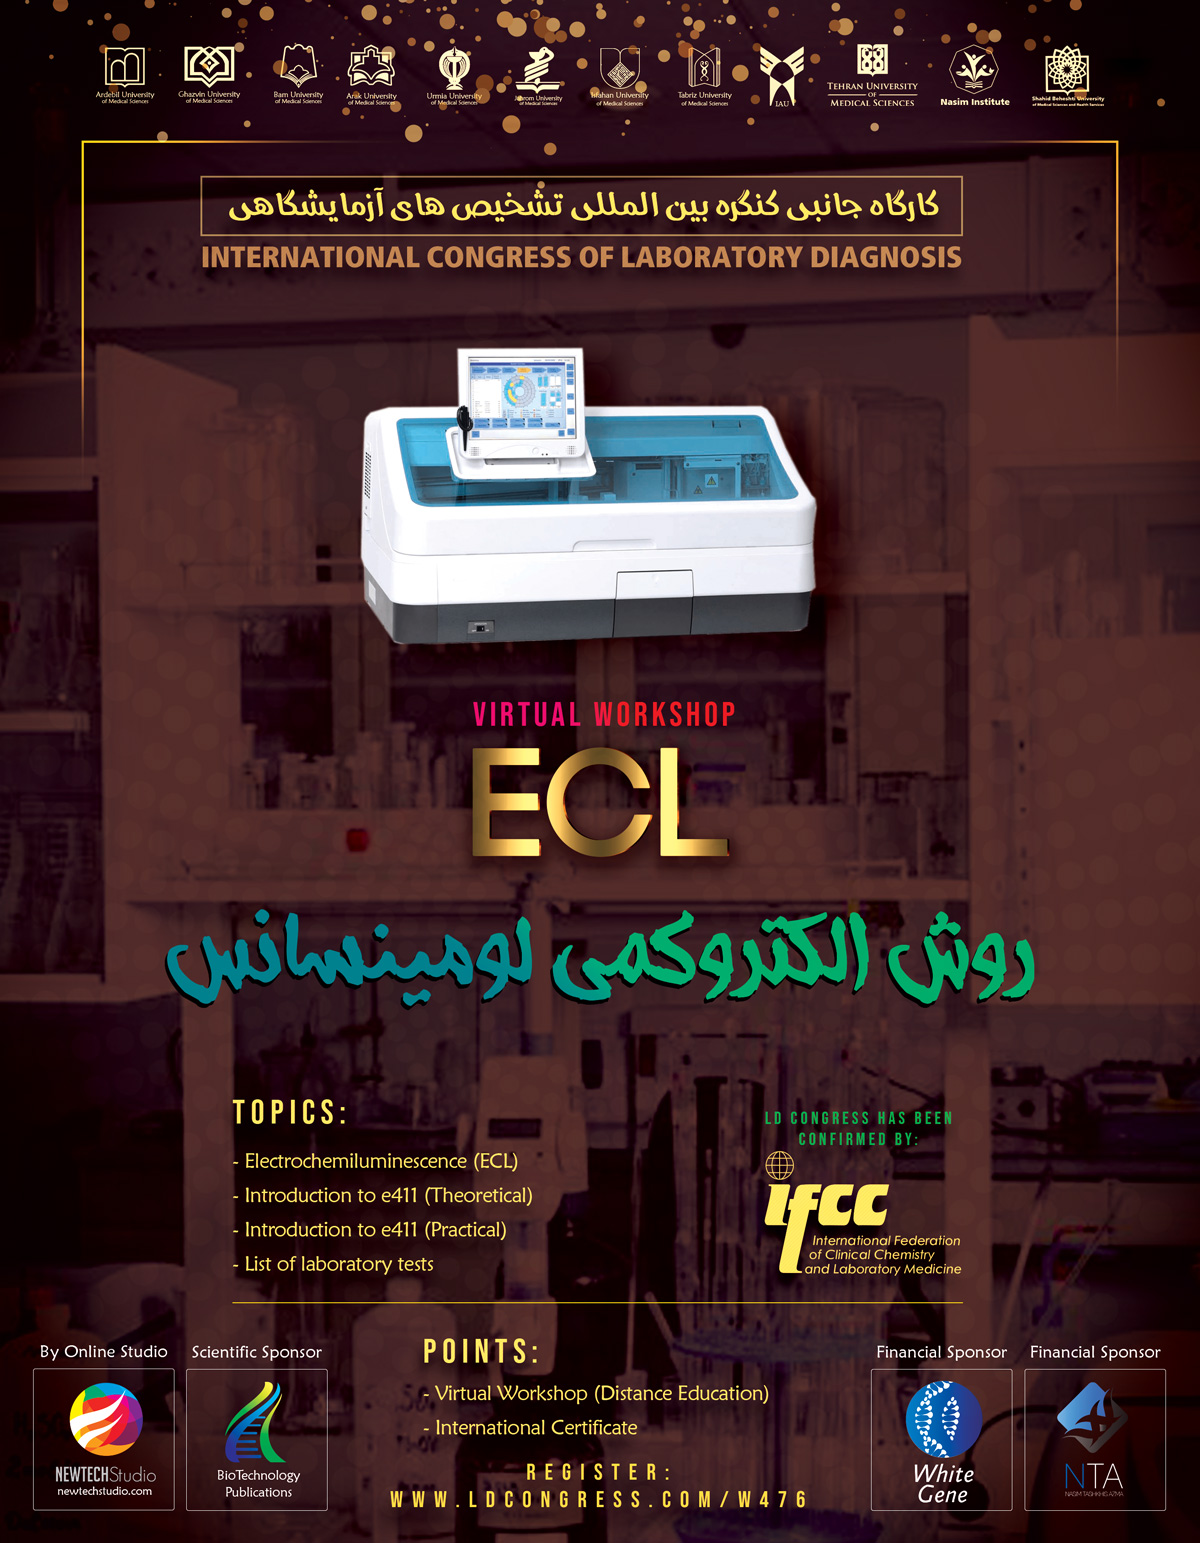 Electrochemiluminescence (ECL)